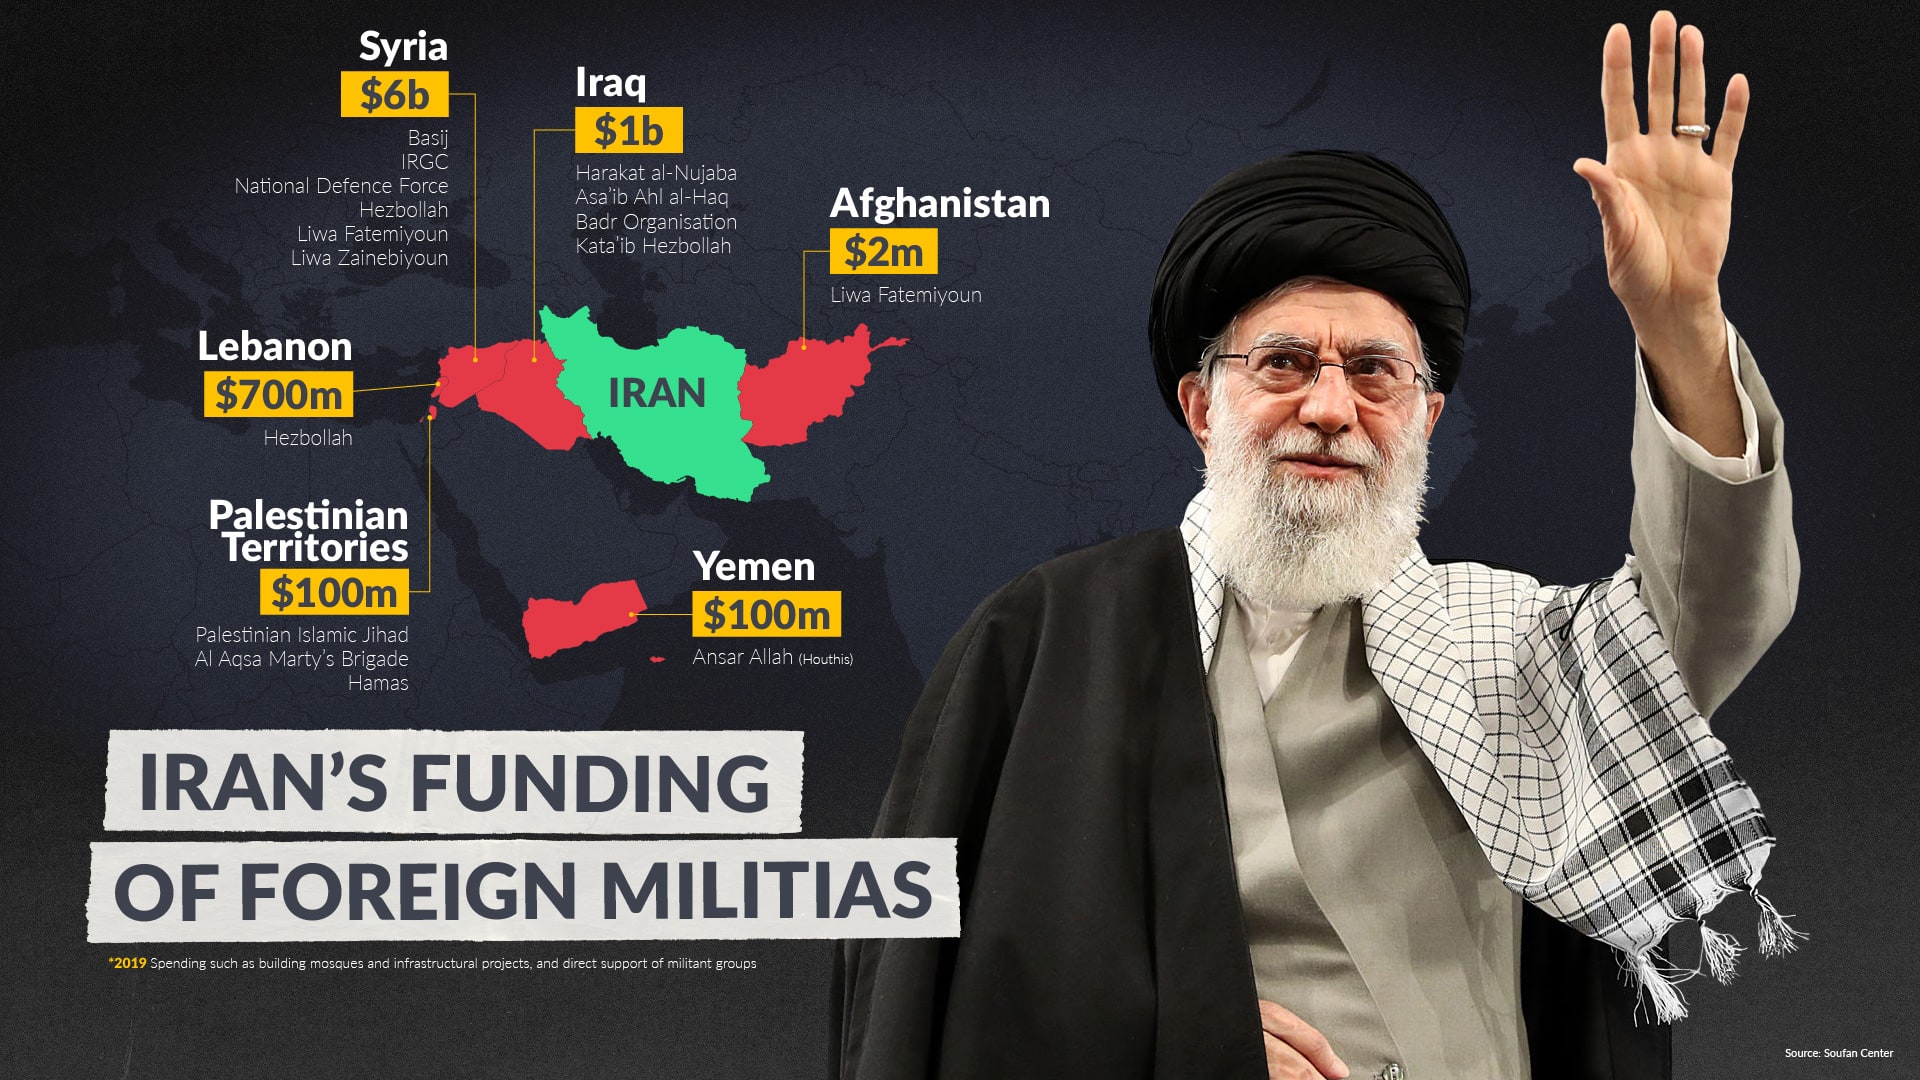 Iran's funding of foreign militias